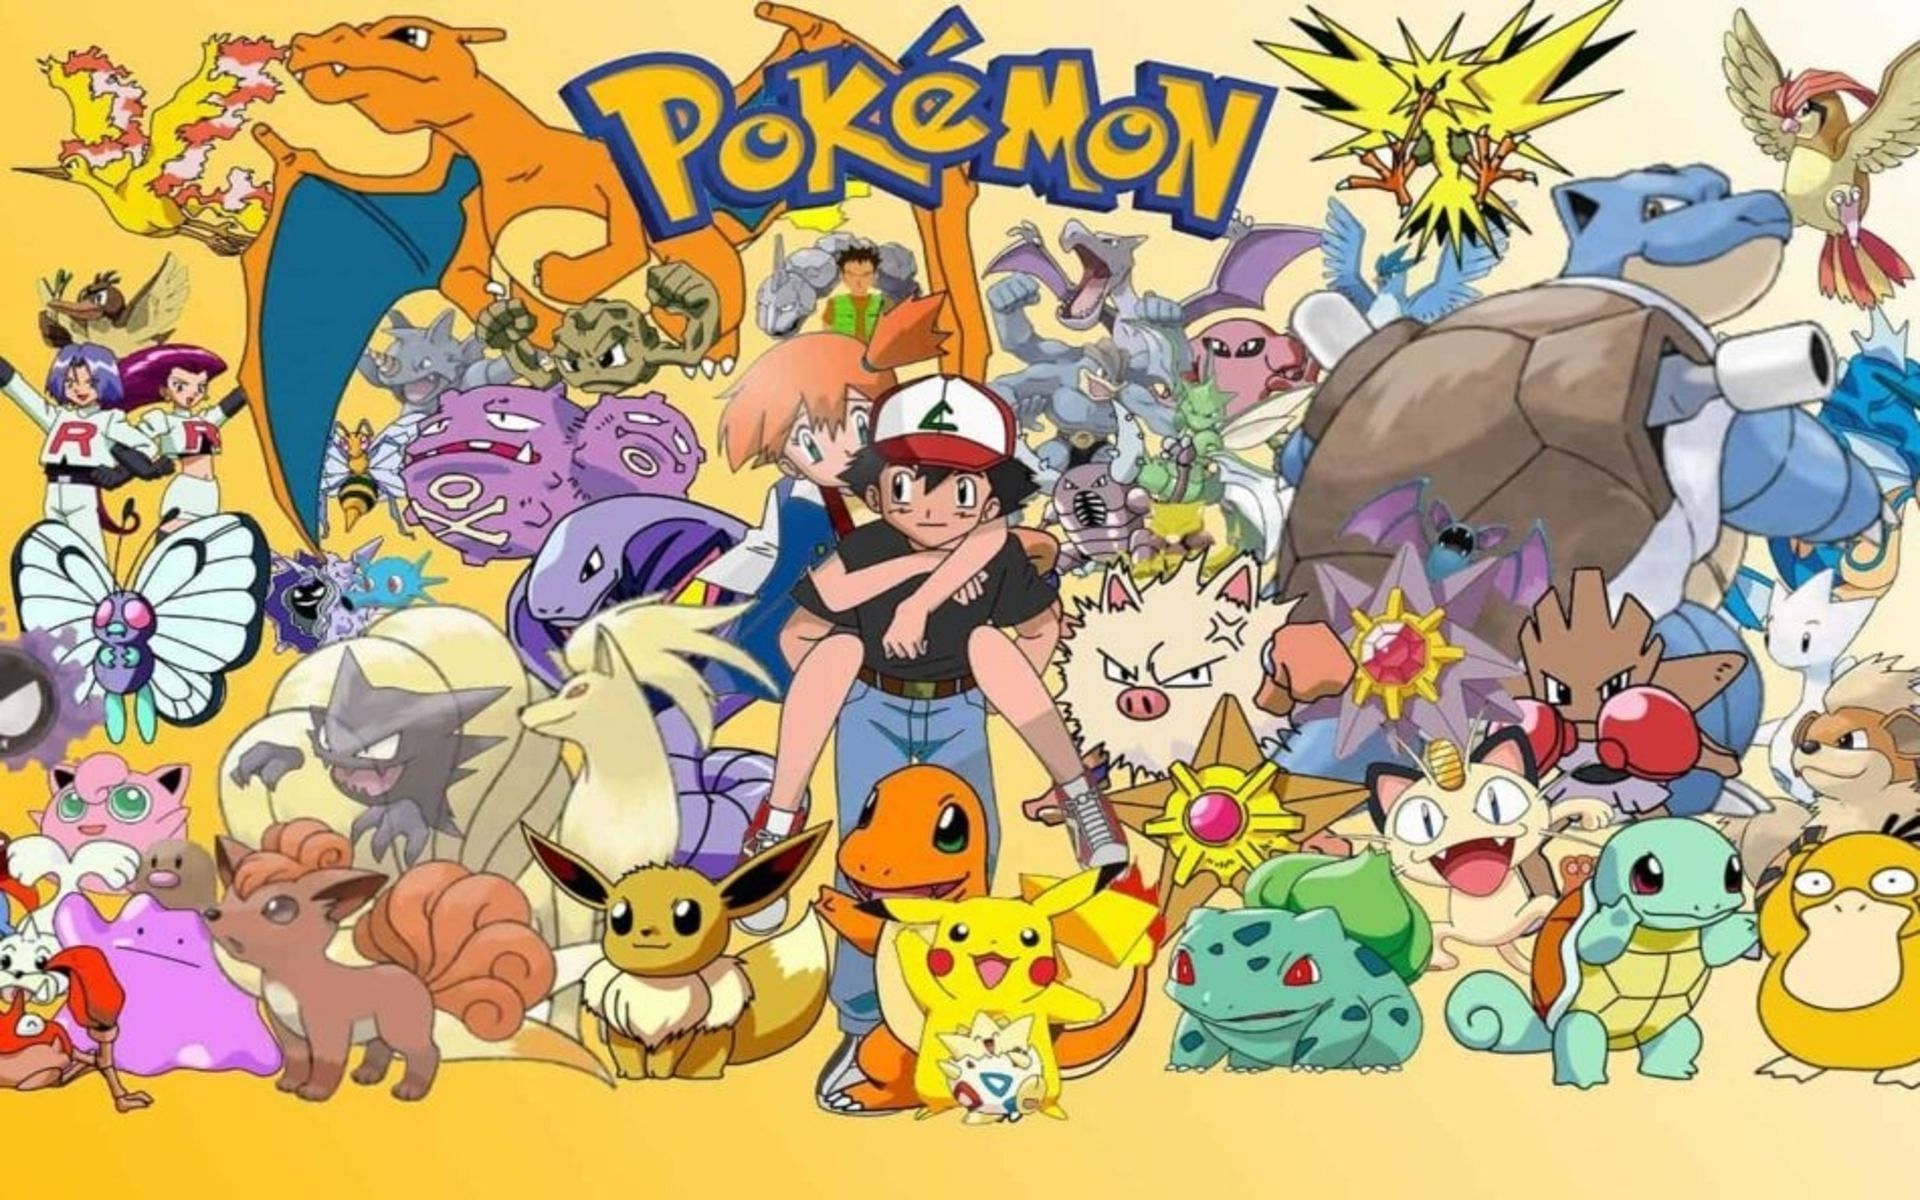 Pokémon animes new season coming to Netflix in US watch the trailer   Polygon